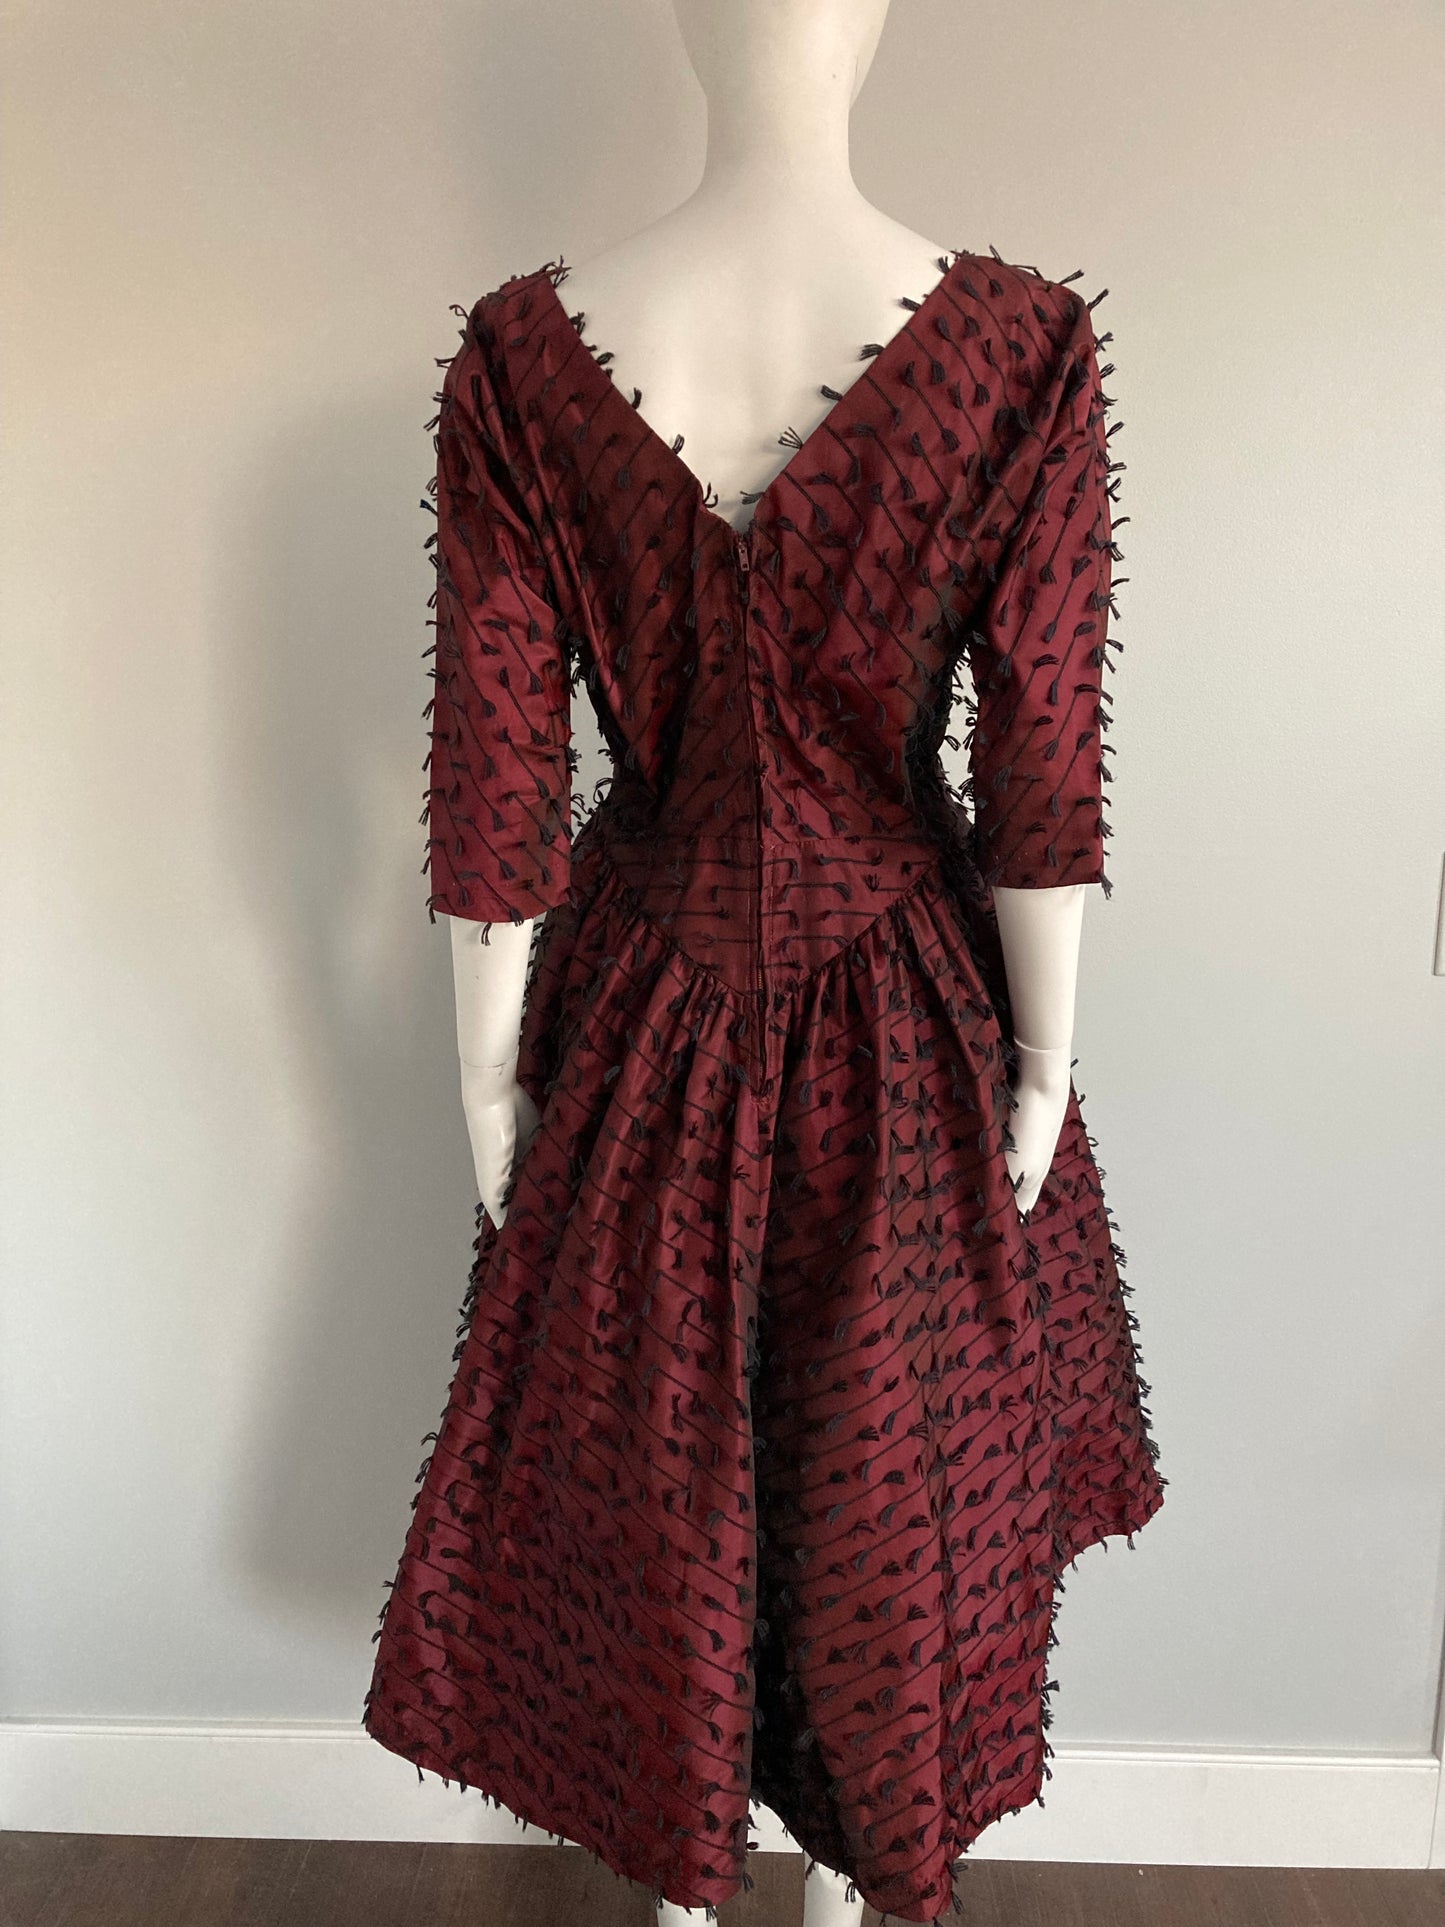 1950s Burgundy Taffeta Party Dress with Tassel Details, Size M